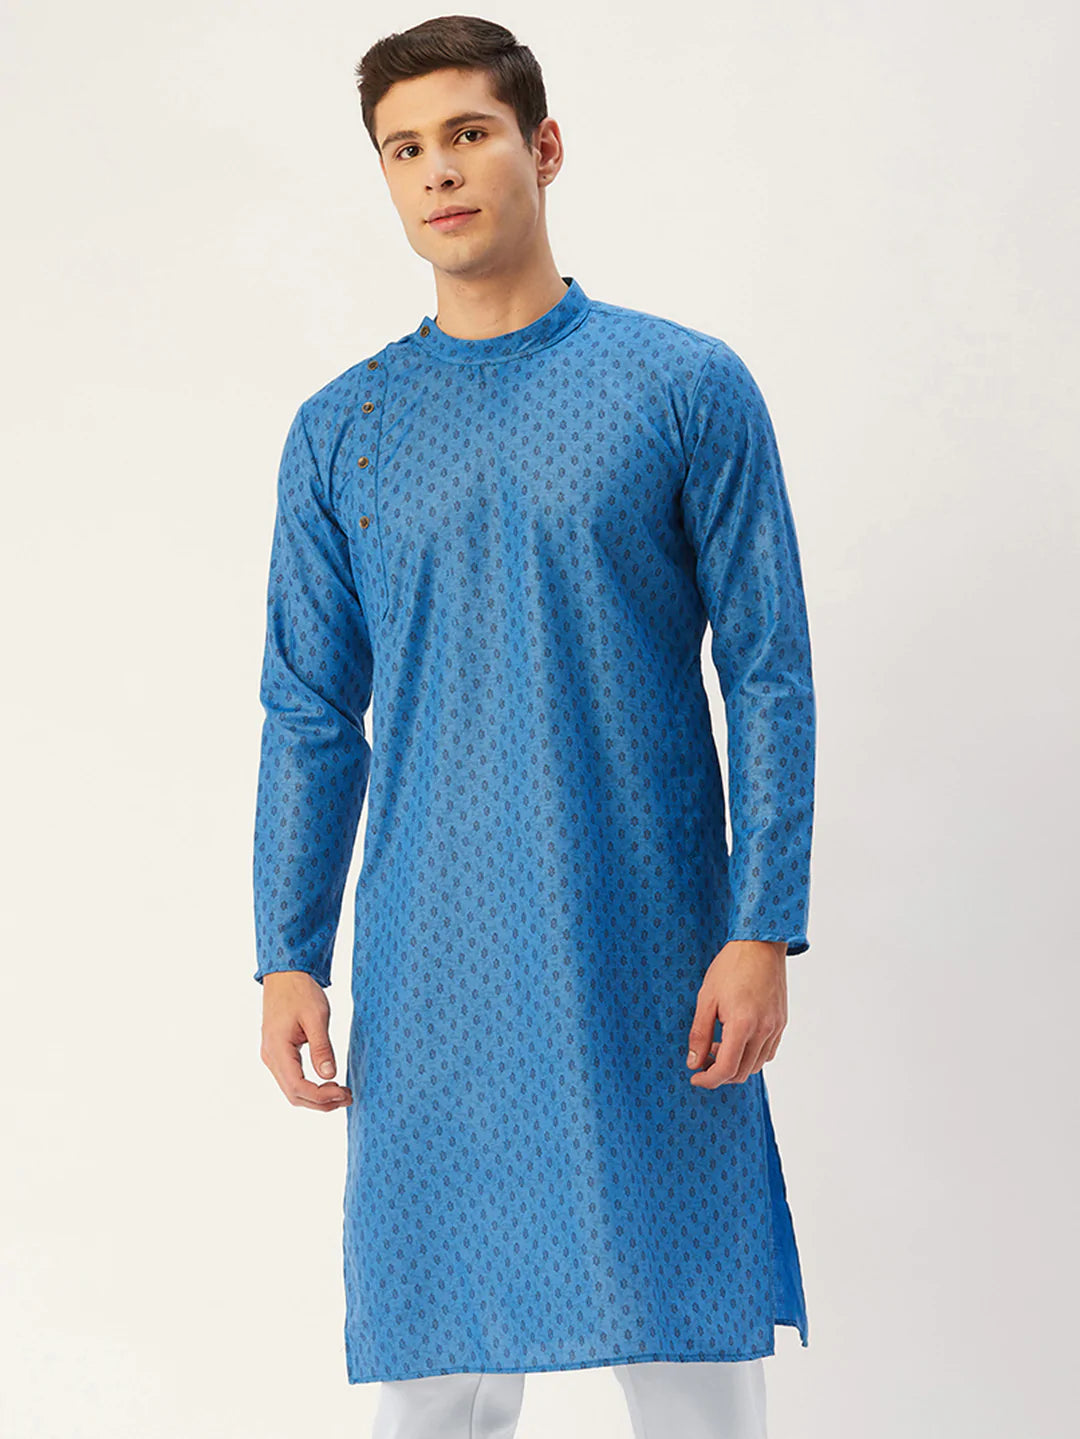 Jompers Men's Blue Cotton printed kurta Only( KO 652 Blue )